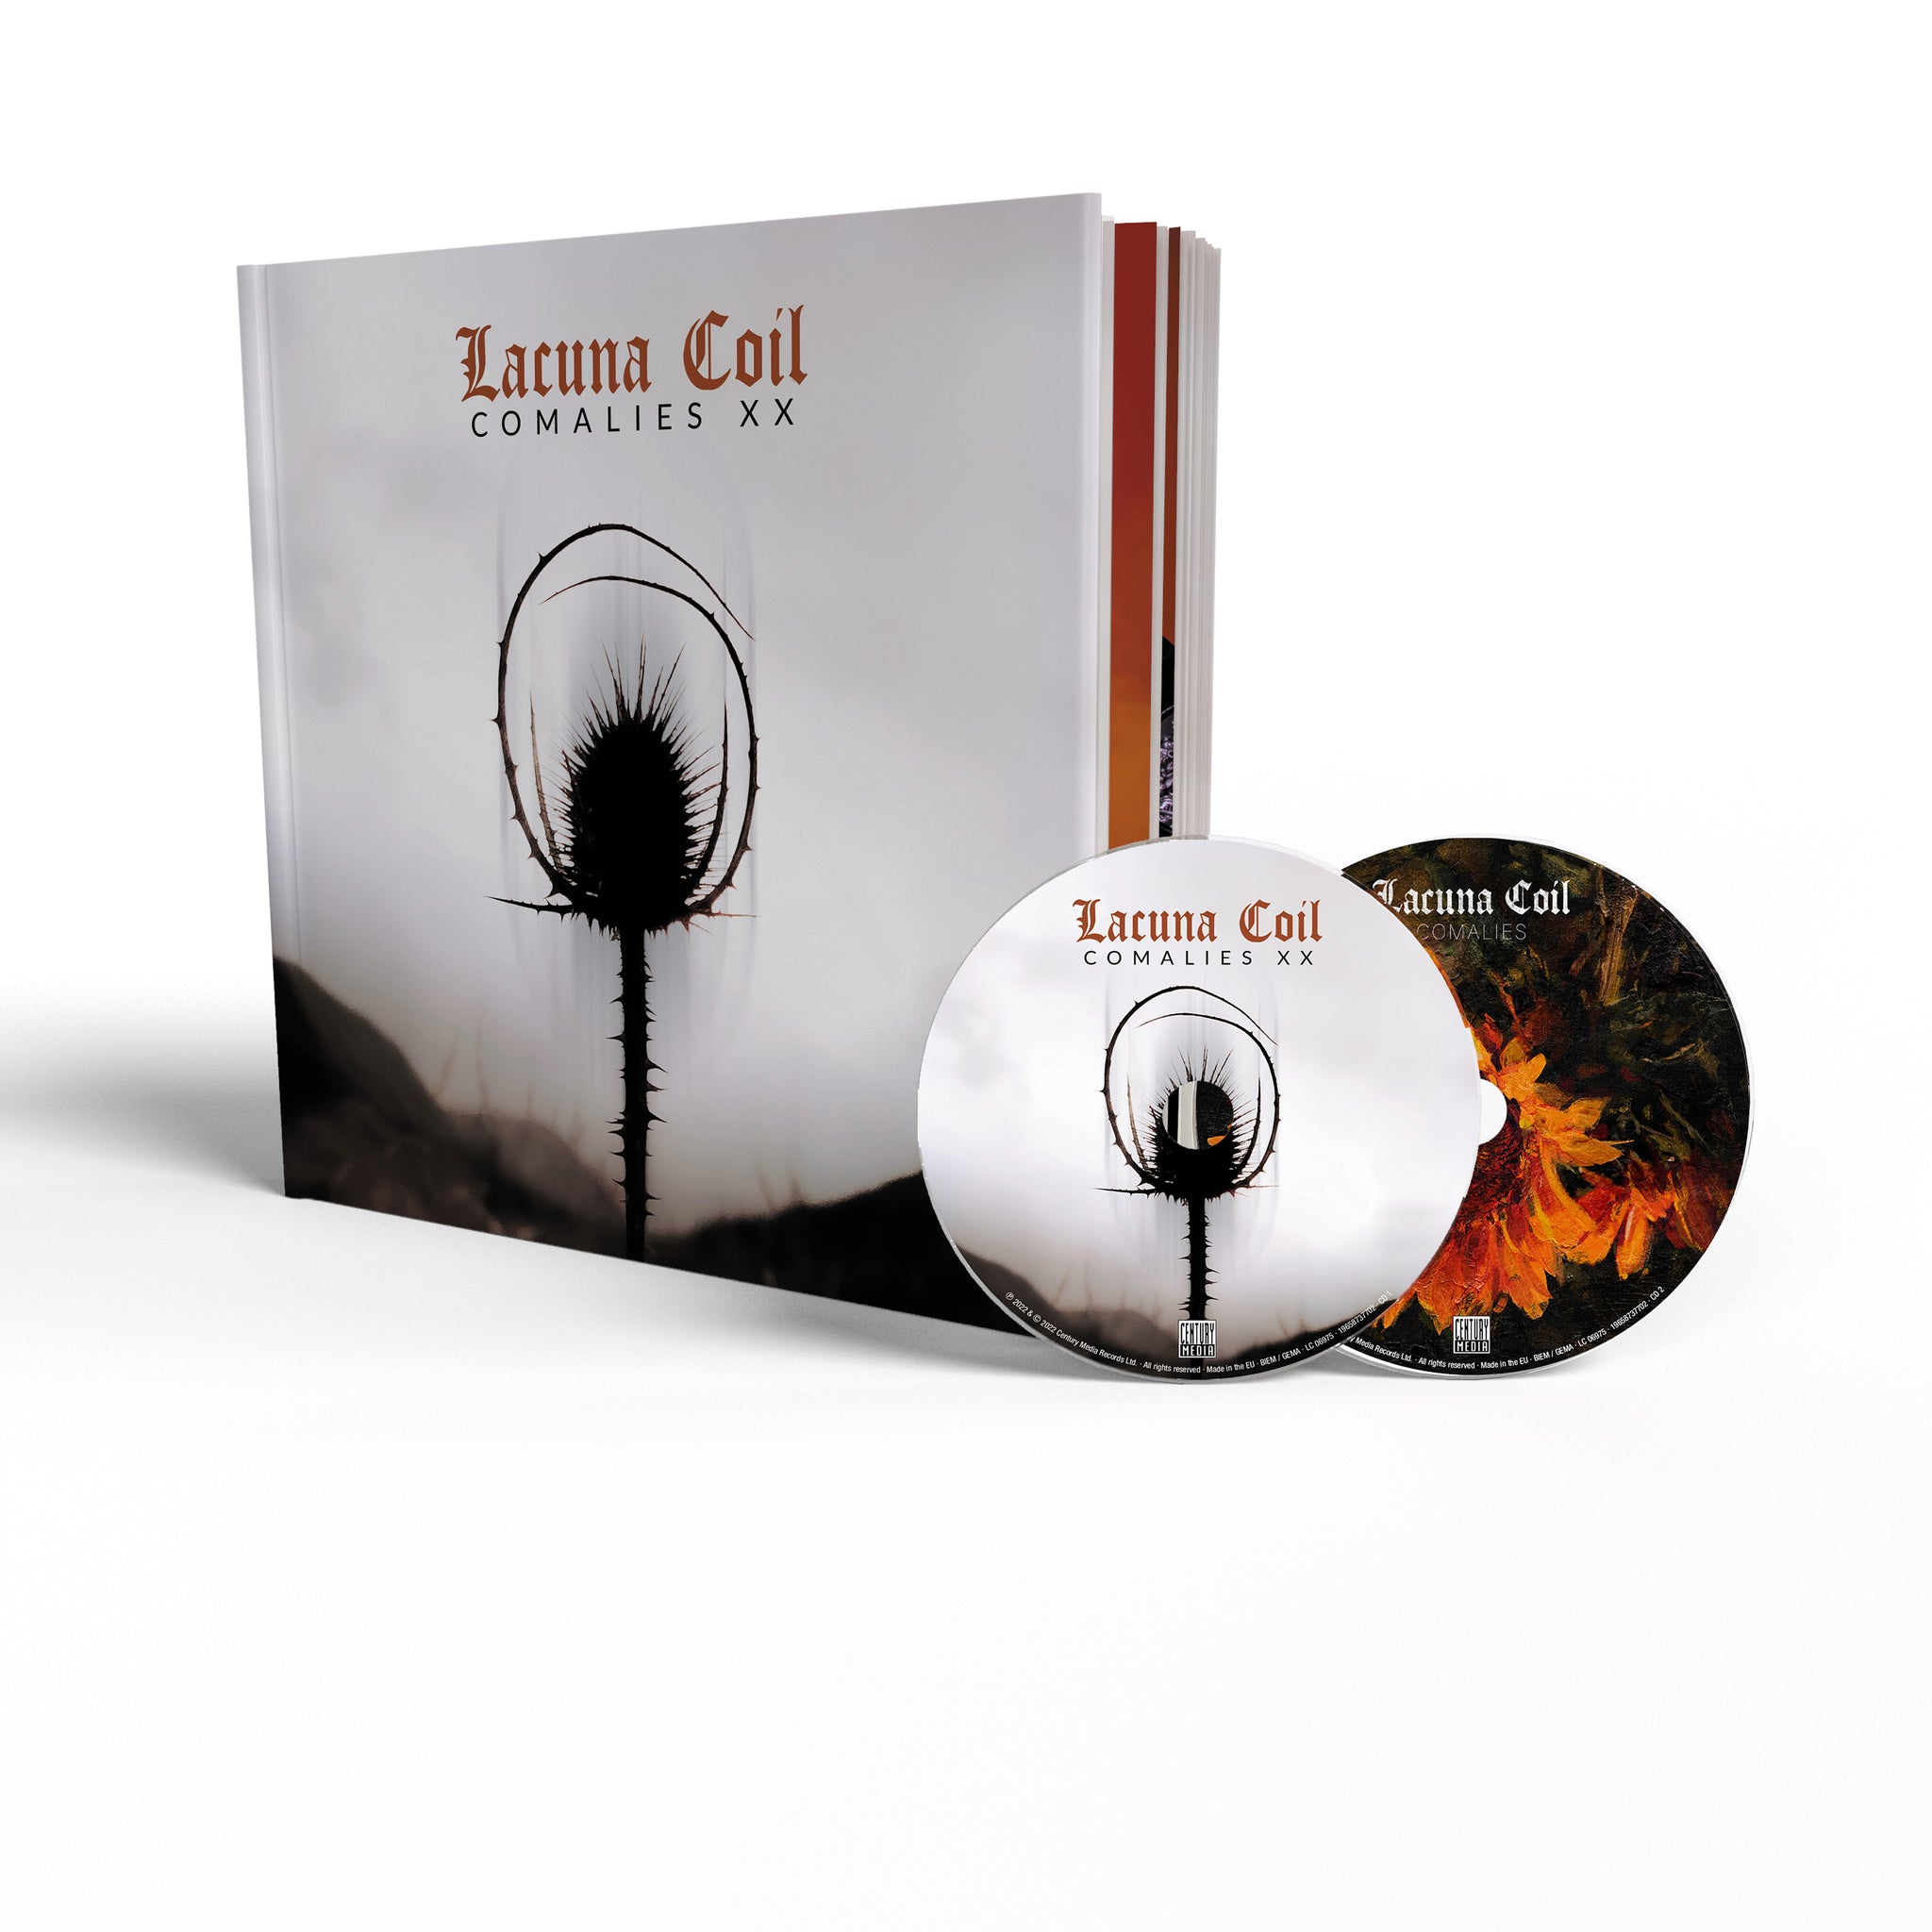 LACUNA COIL - Comalies XX - Deluxe 2CD Artbook